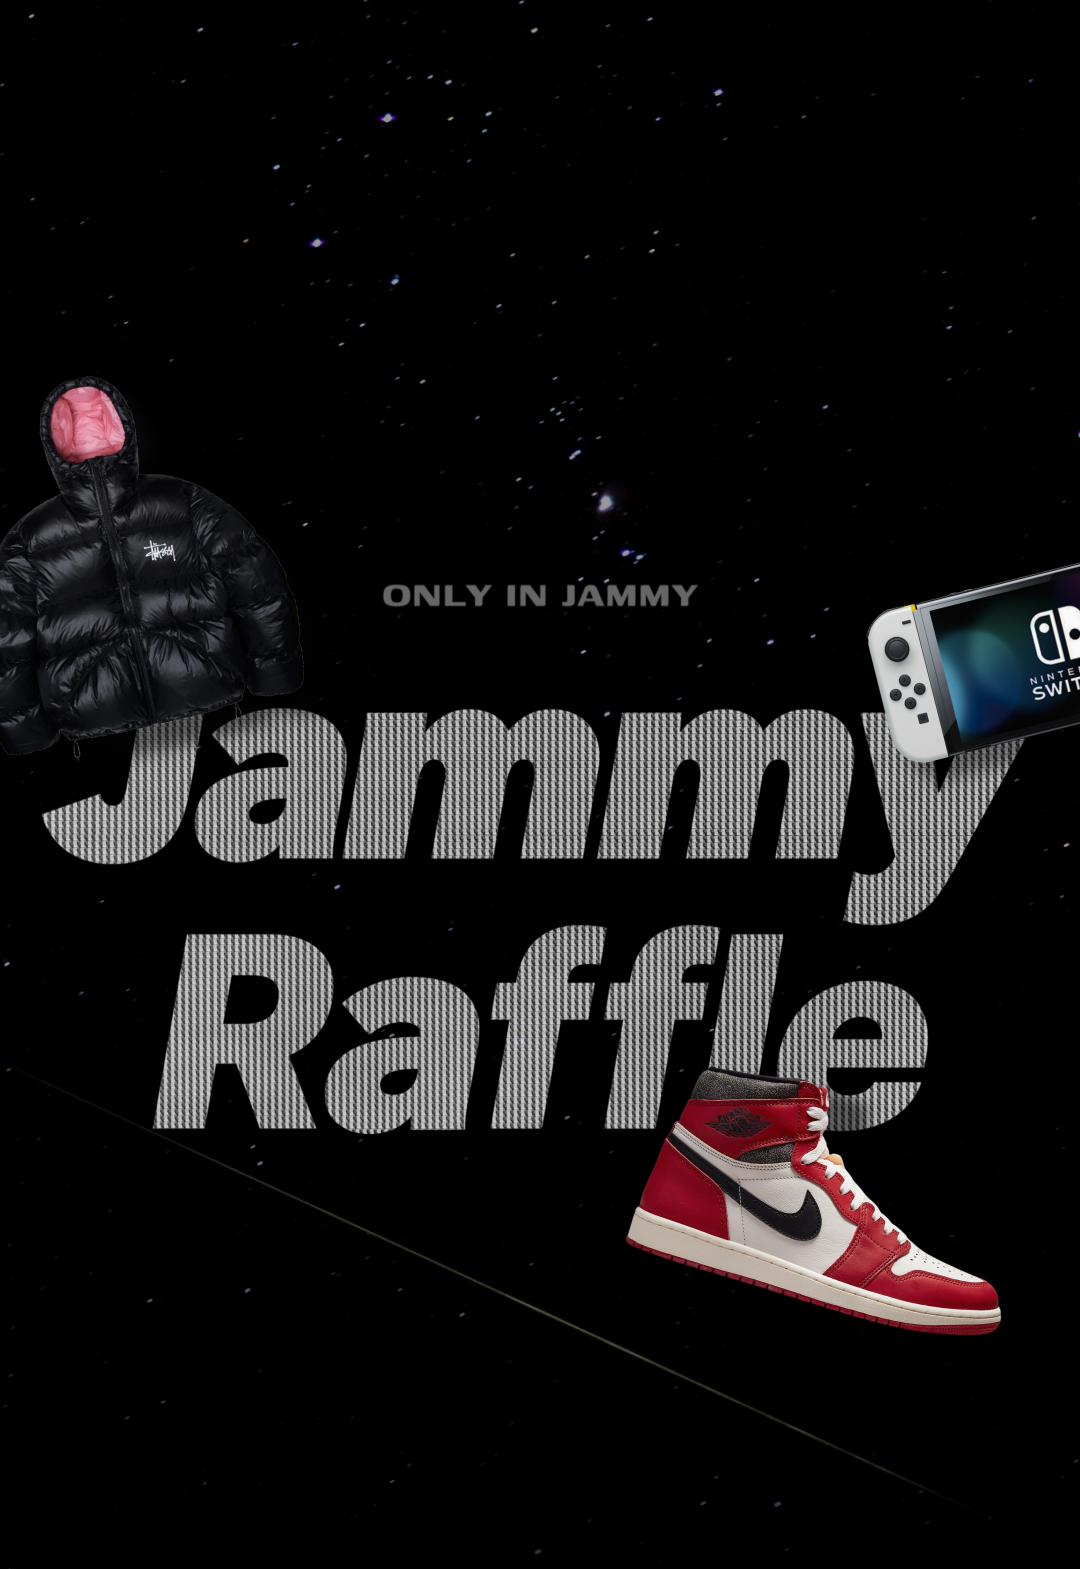 Jammy Raffle